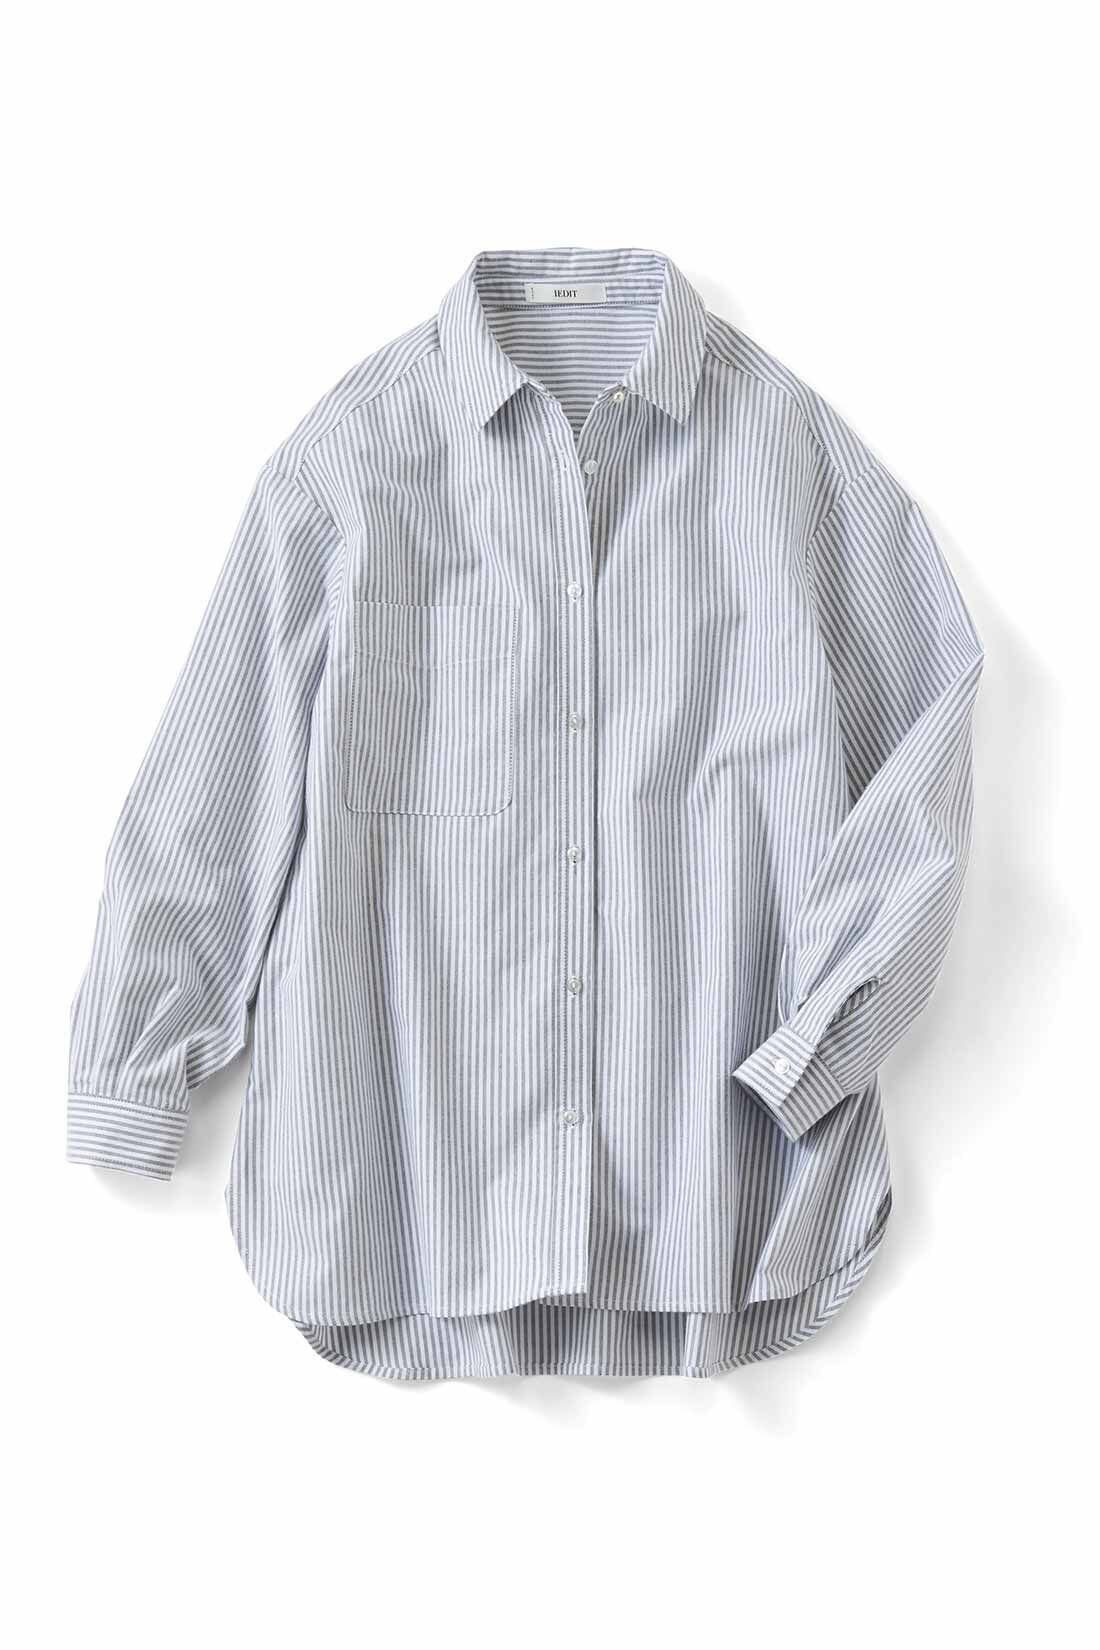 IEDIT|IEDIT[イディット]　バックフレアーデザインがきいた オックスフォード素材のこなれ見えシャツ〈グレー〉|グレー